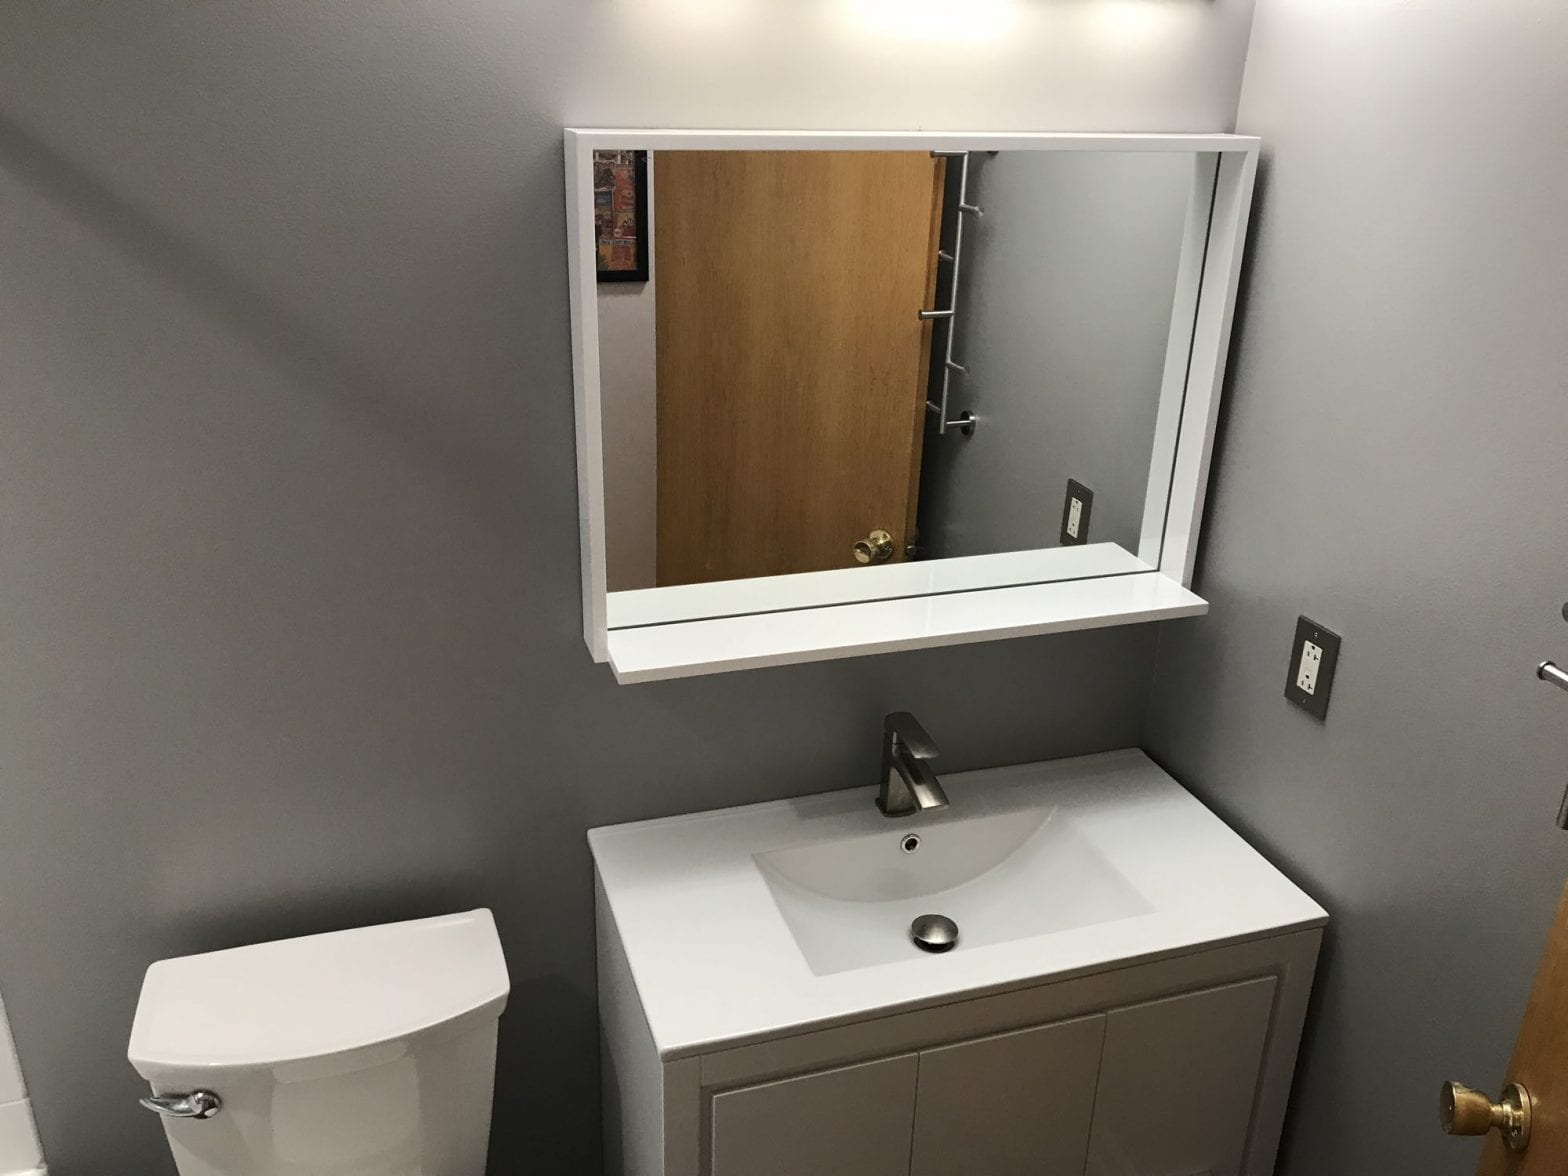 Bathroom remodeling in Schaumburg - new sink, paint, vanity mirror